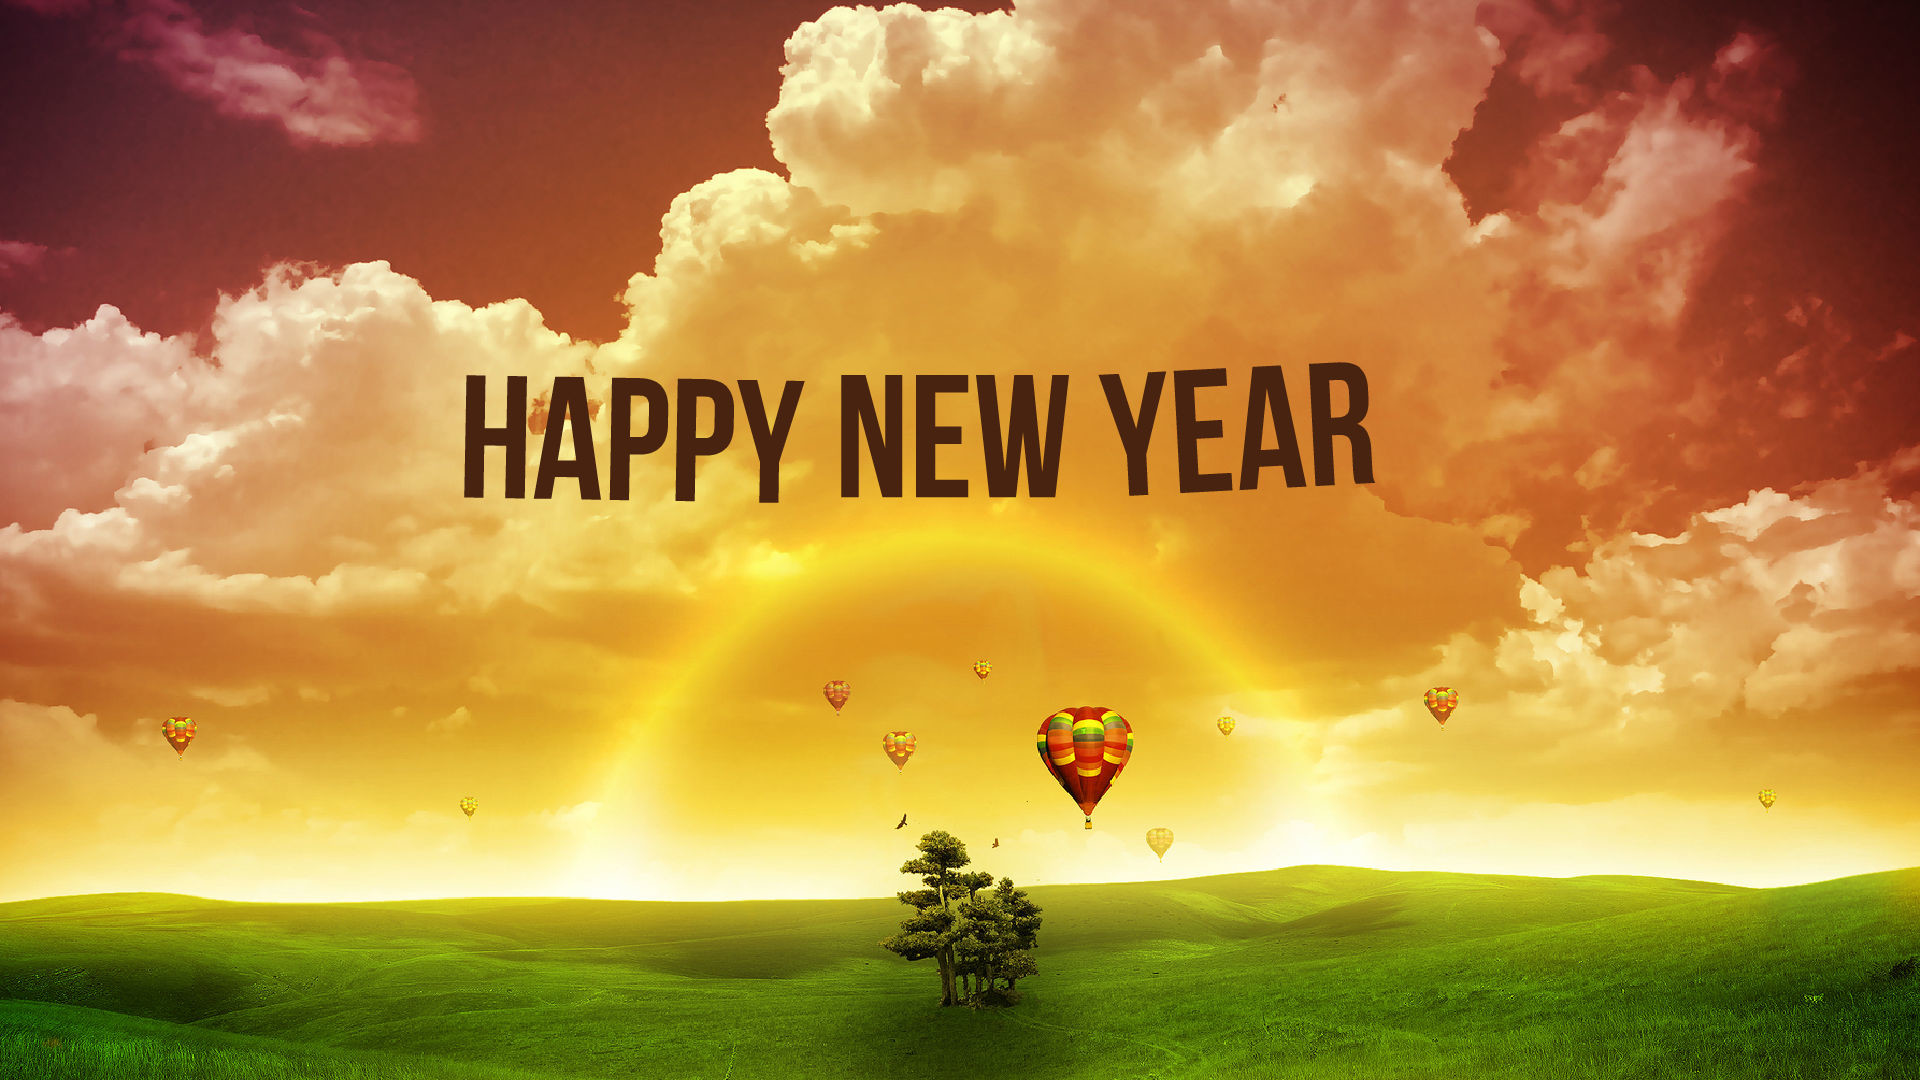 1920x1080 Happy New Year hd wallpaper free download